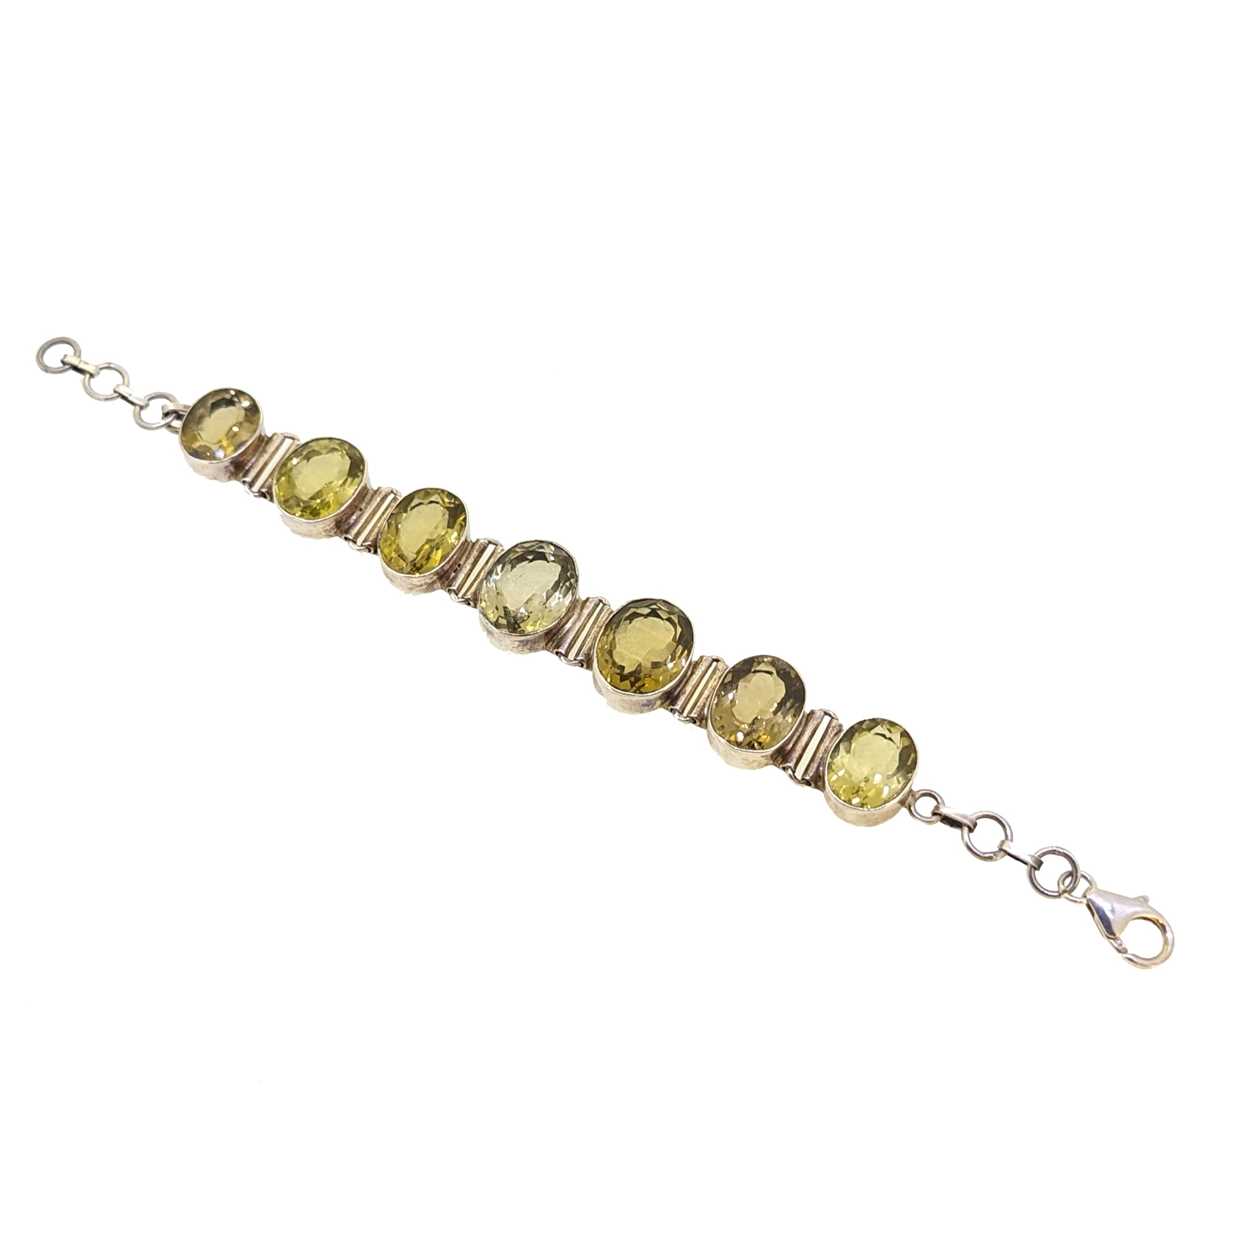 A citrine bracelet, - Image 2 of 2